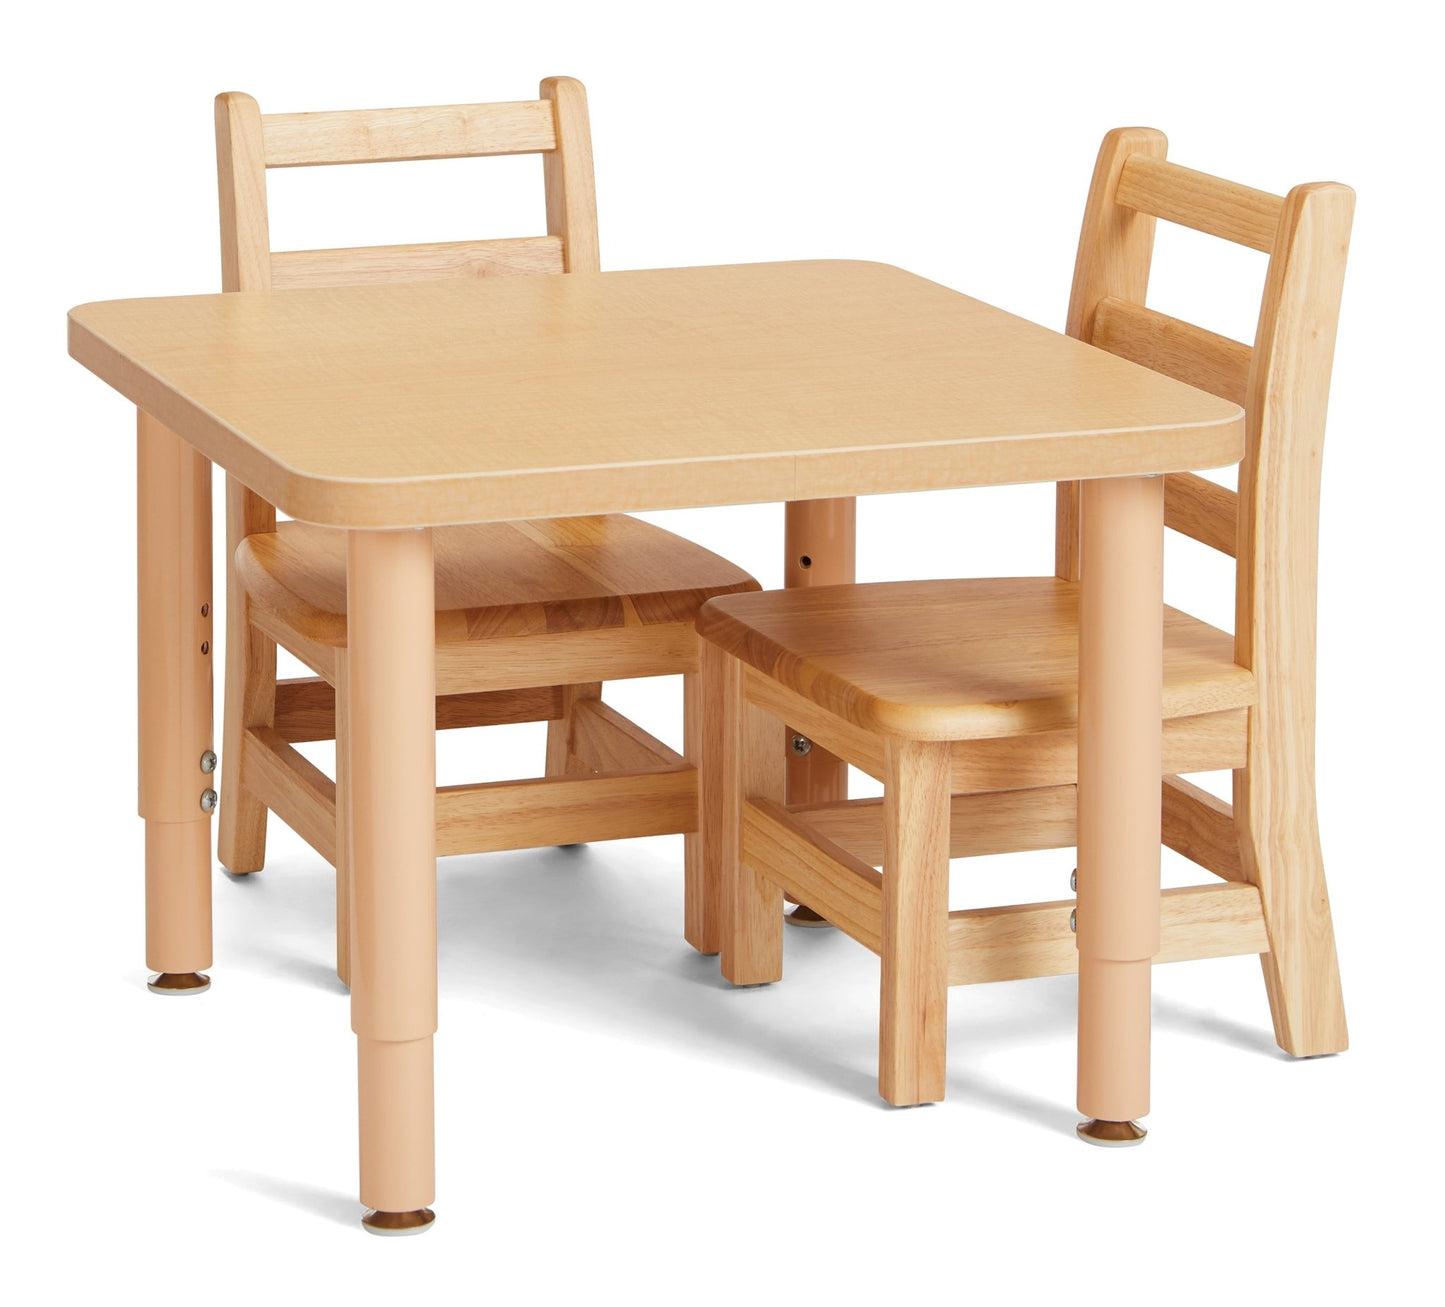 Jonti-Craft Purpose+ Square Table - 48" x 48" (Jonti-Craft JON-6251JCP251) - SchoolOutlet